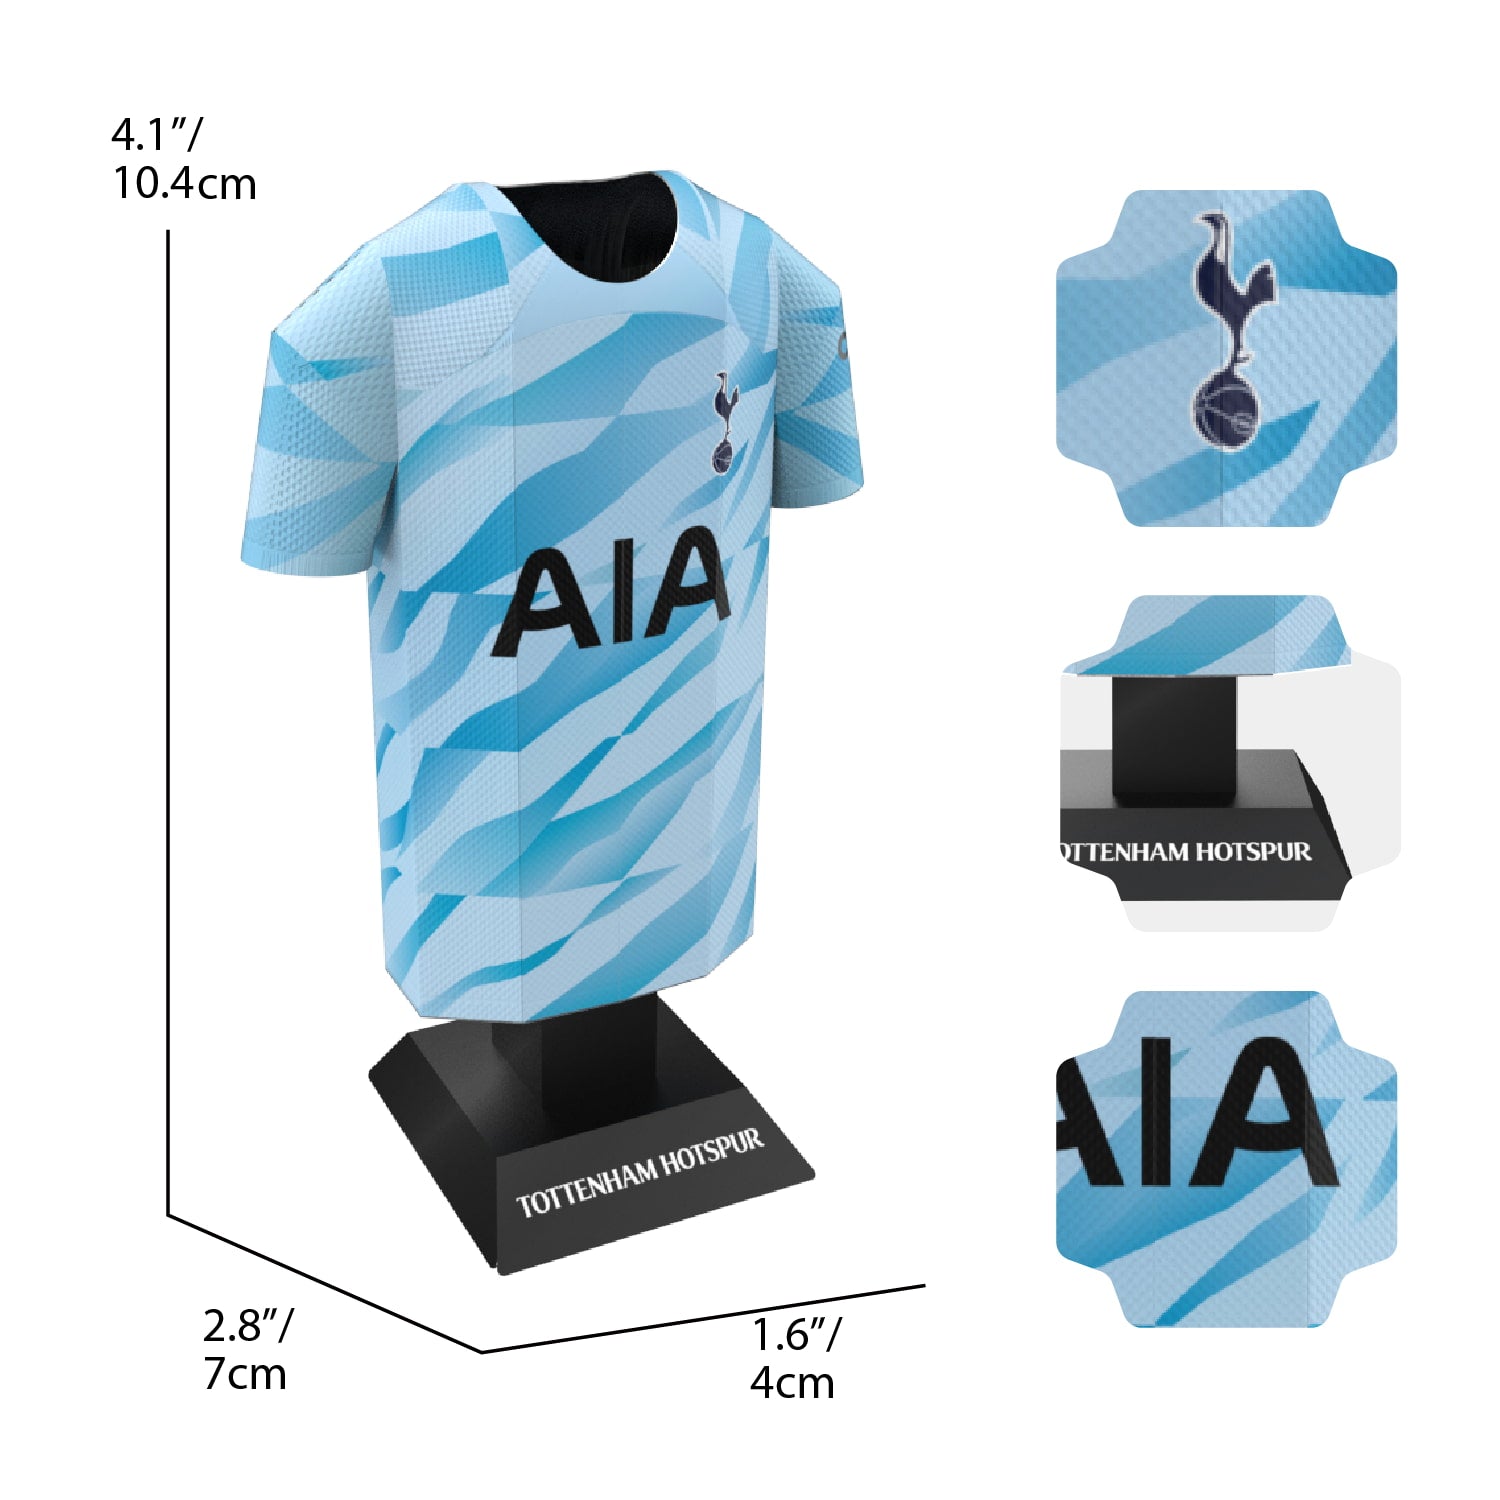 Tottenham goalkeeper shirt dimensions